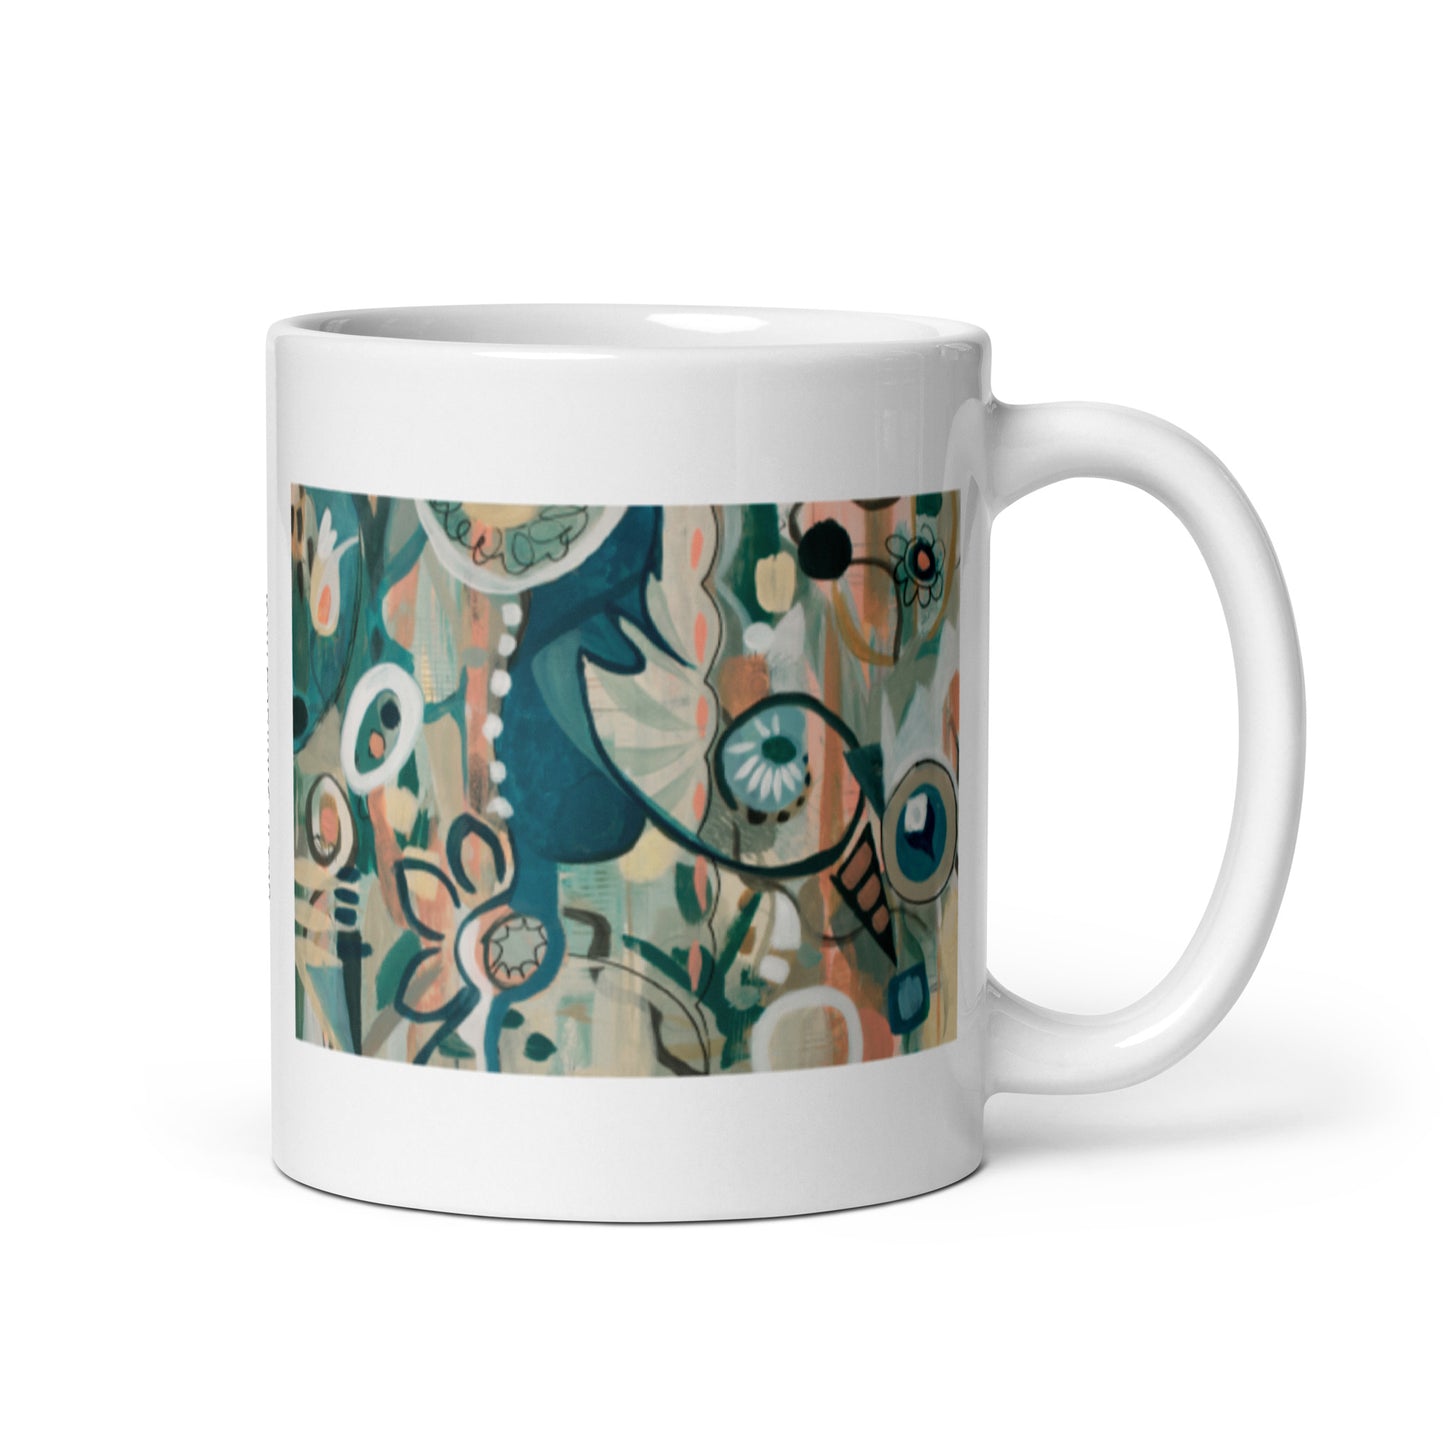 In Lieu of Flowers, 2-3 White glossy mug